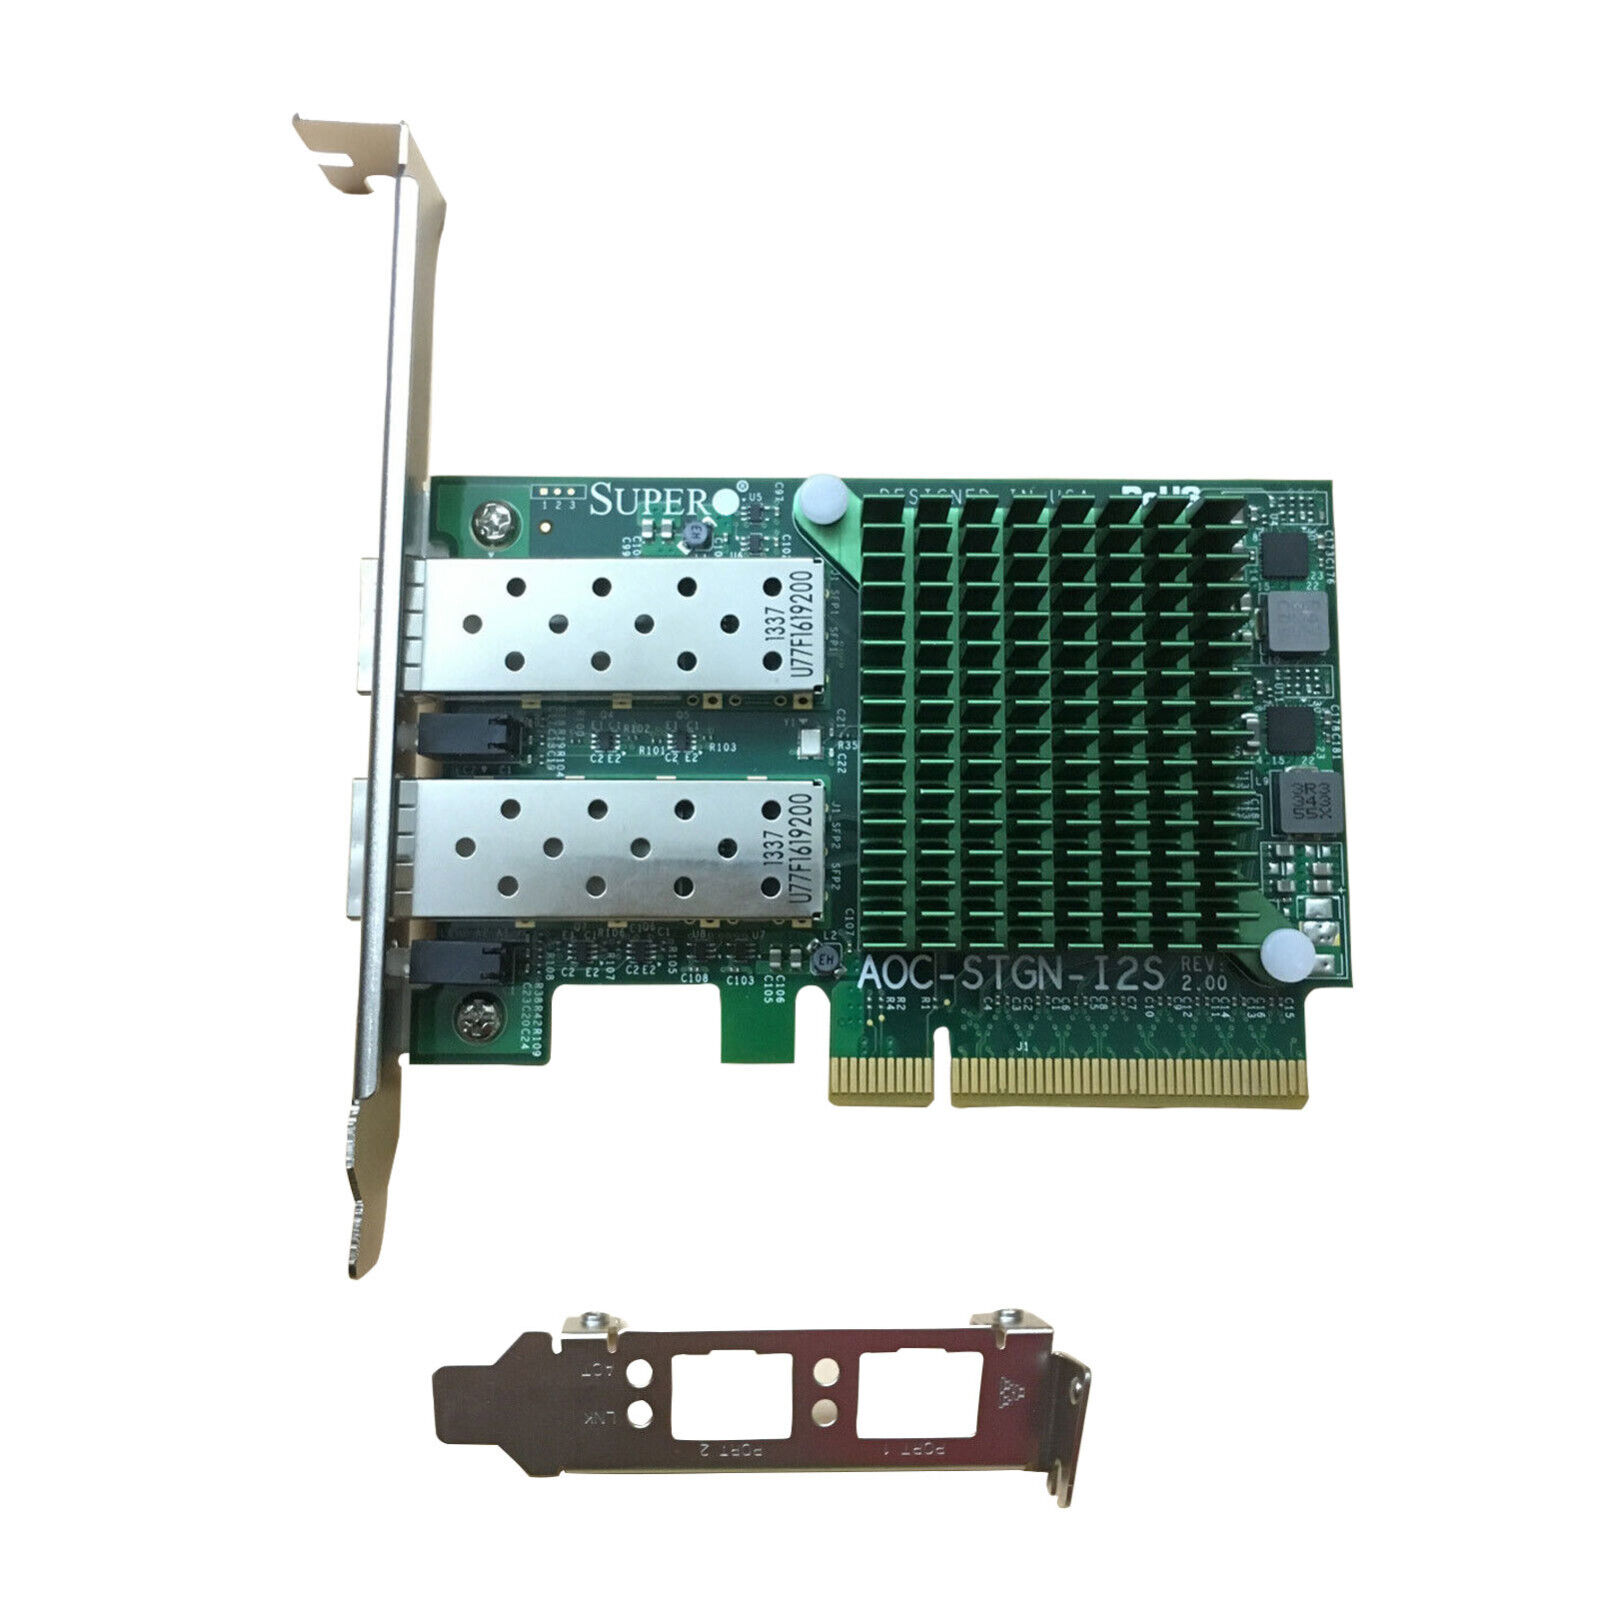 Aoc-Stgn-12s Supermicro Rev 2.0 Dual Port 10 Gigabit Ethernet Card